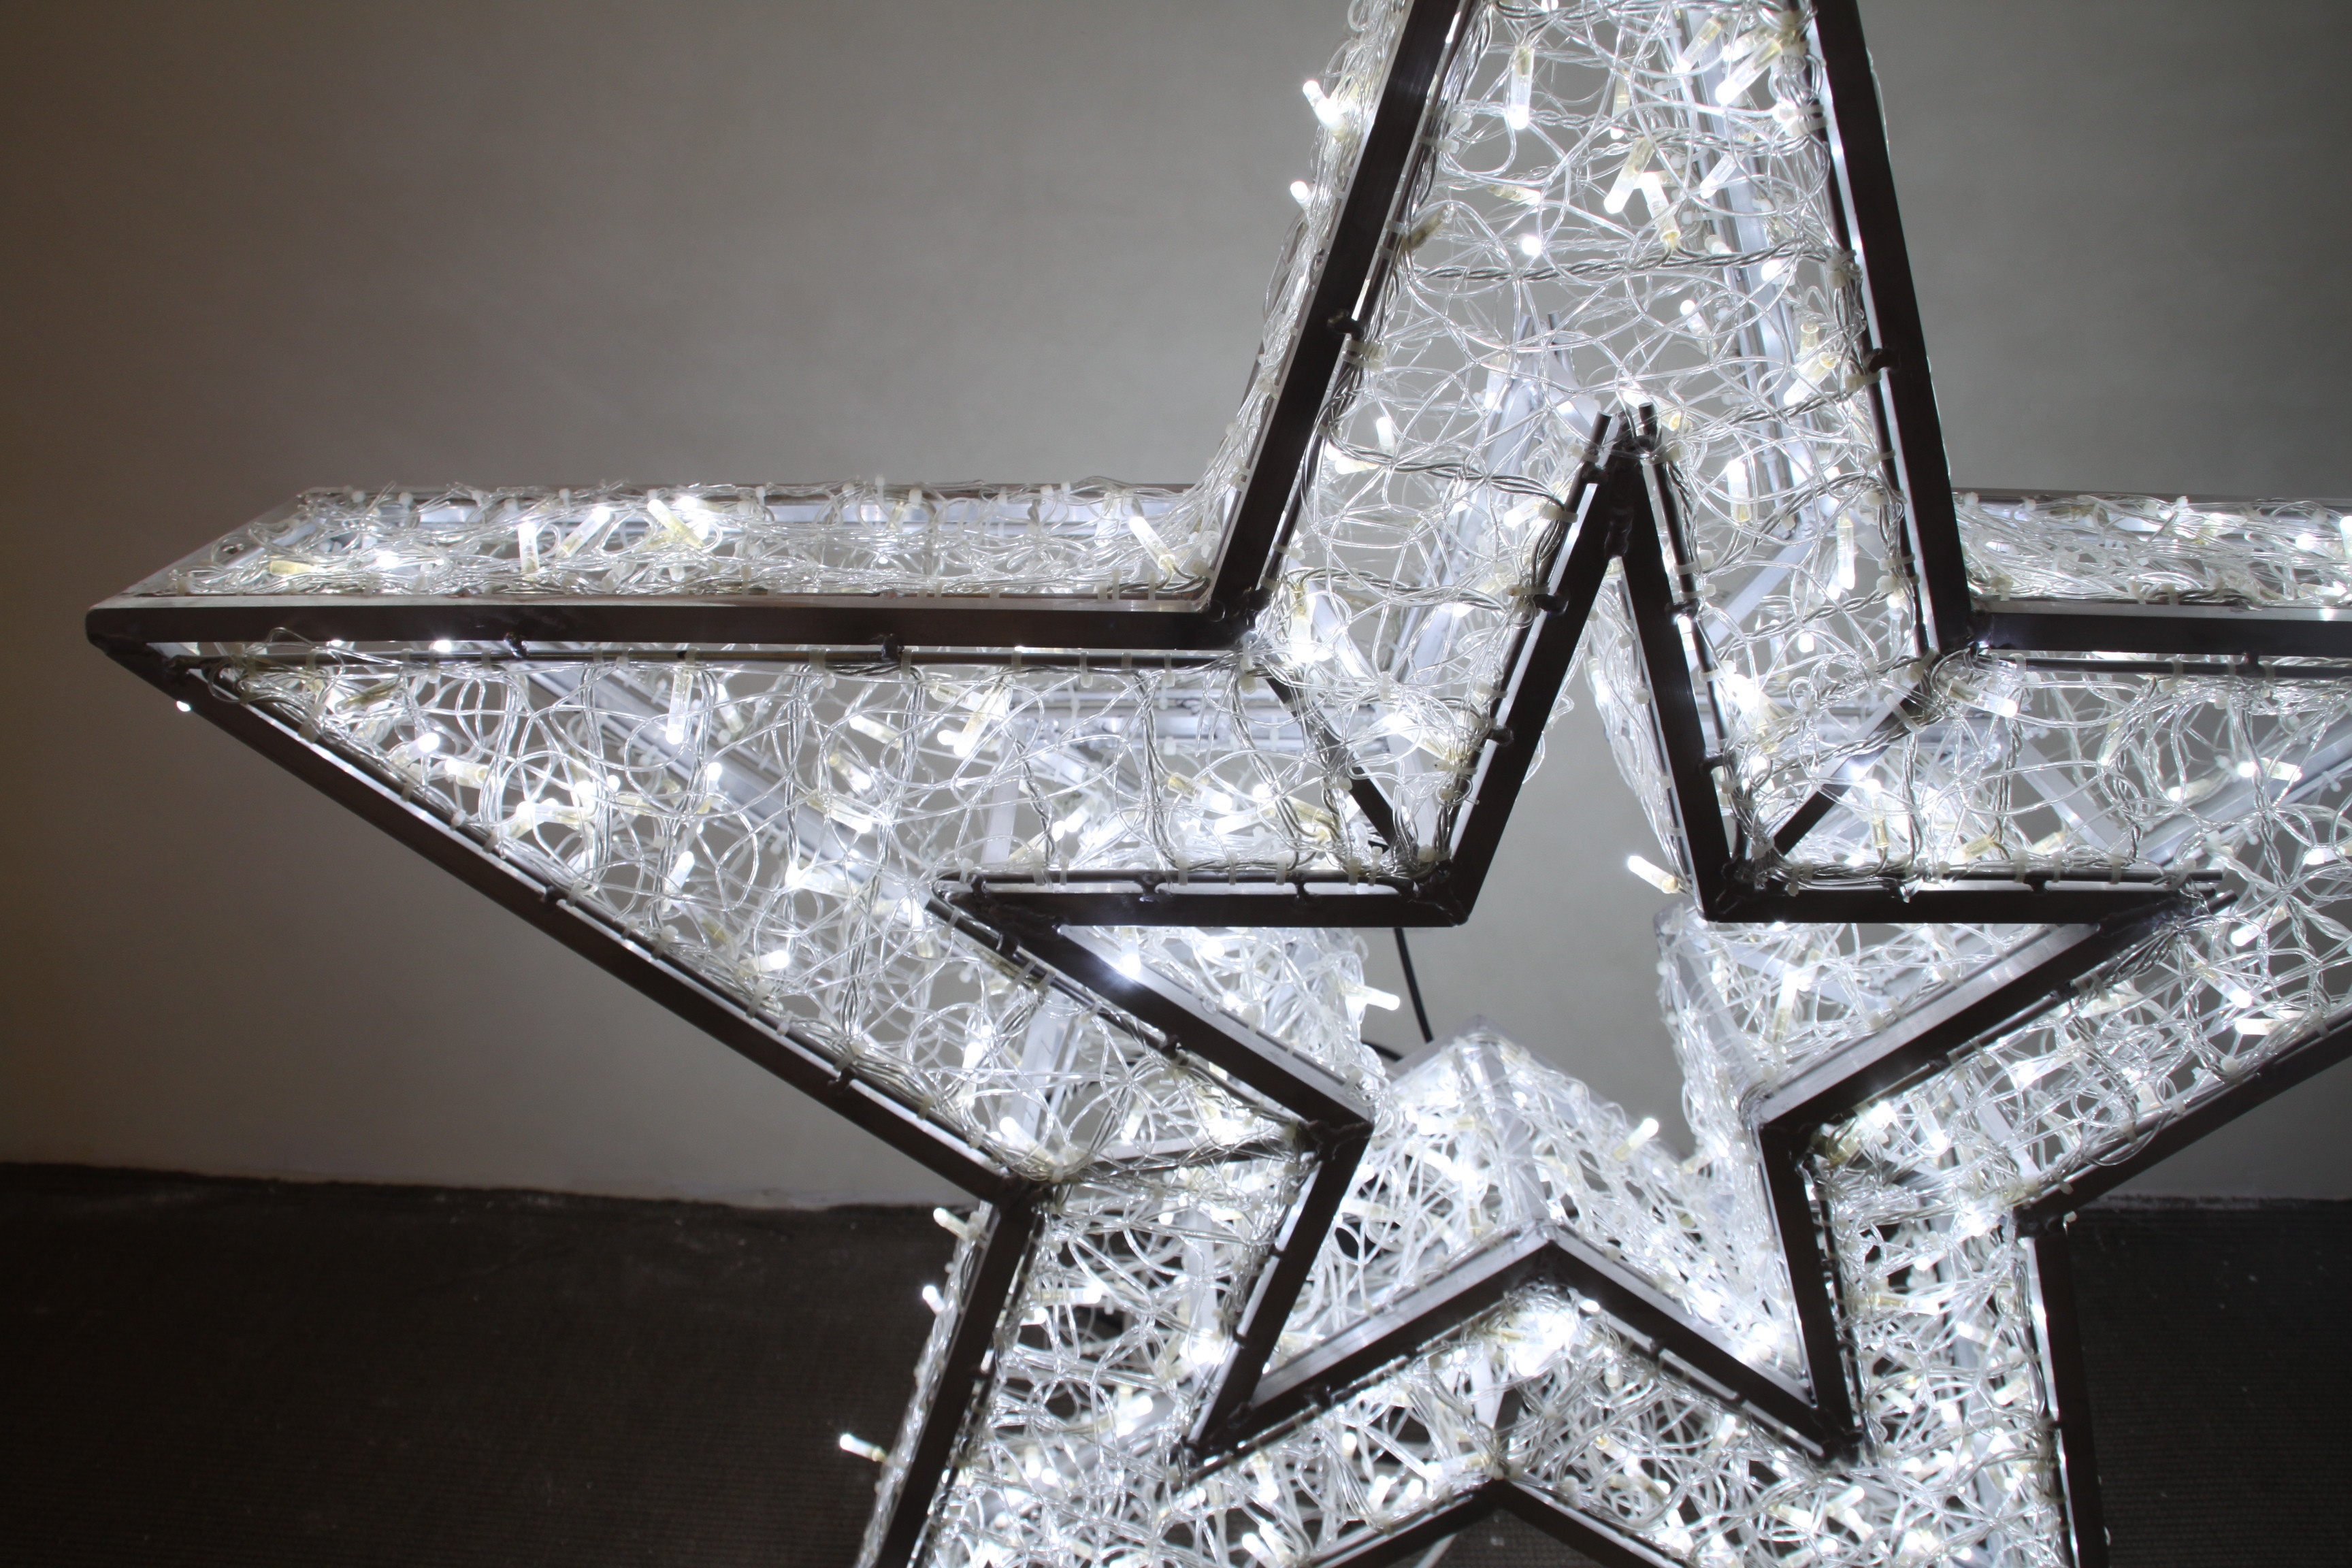 3D Christmas Decoration 100% Glue Bullet Led Aluminum Frame Bright Star Motif Light